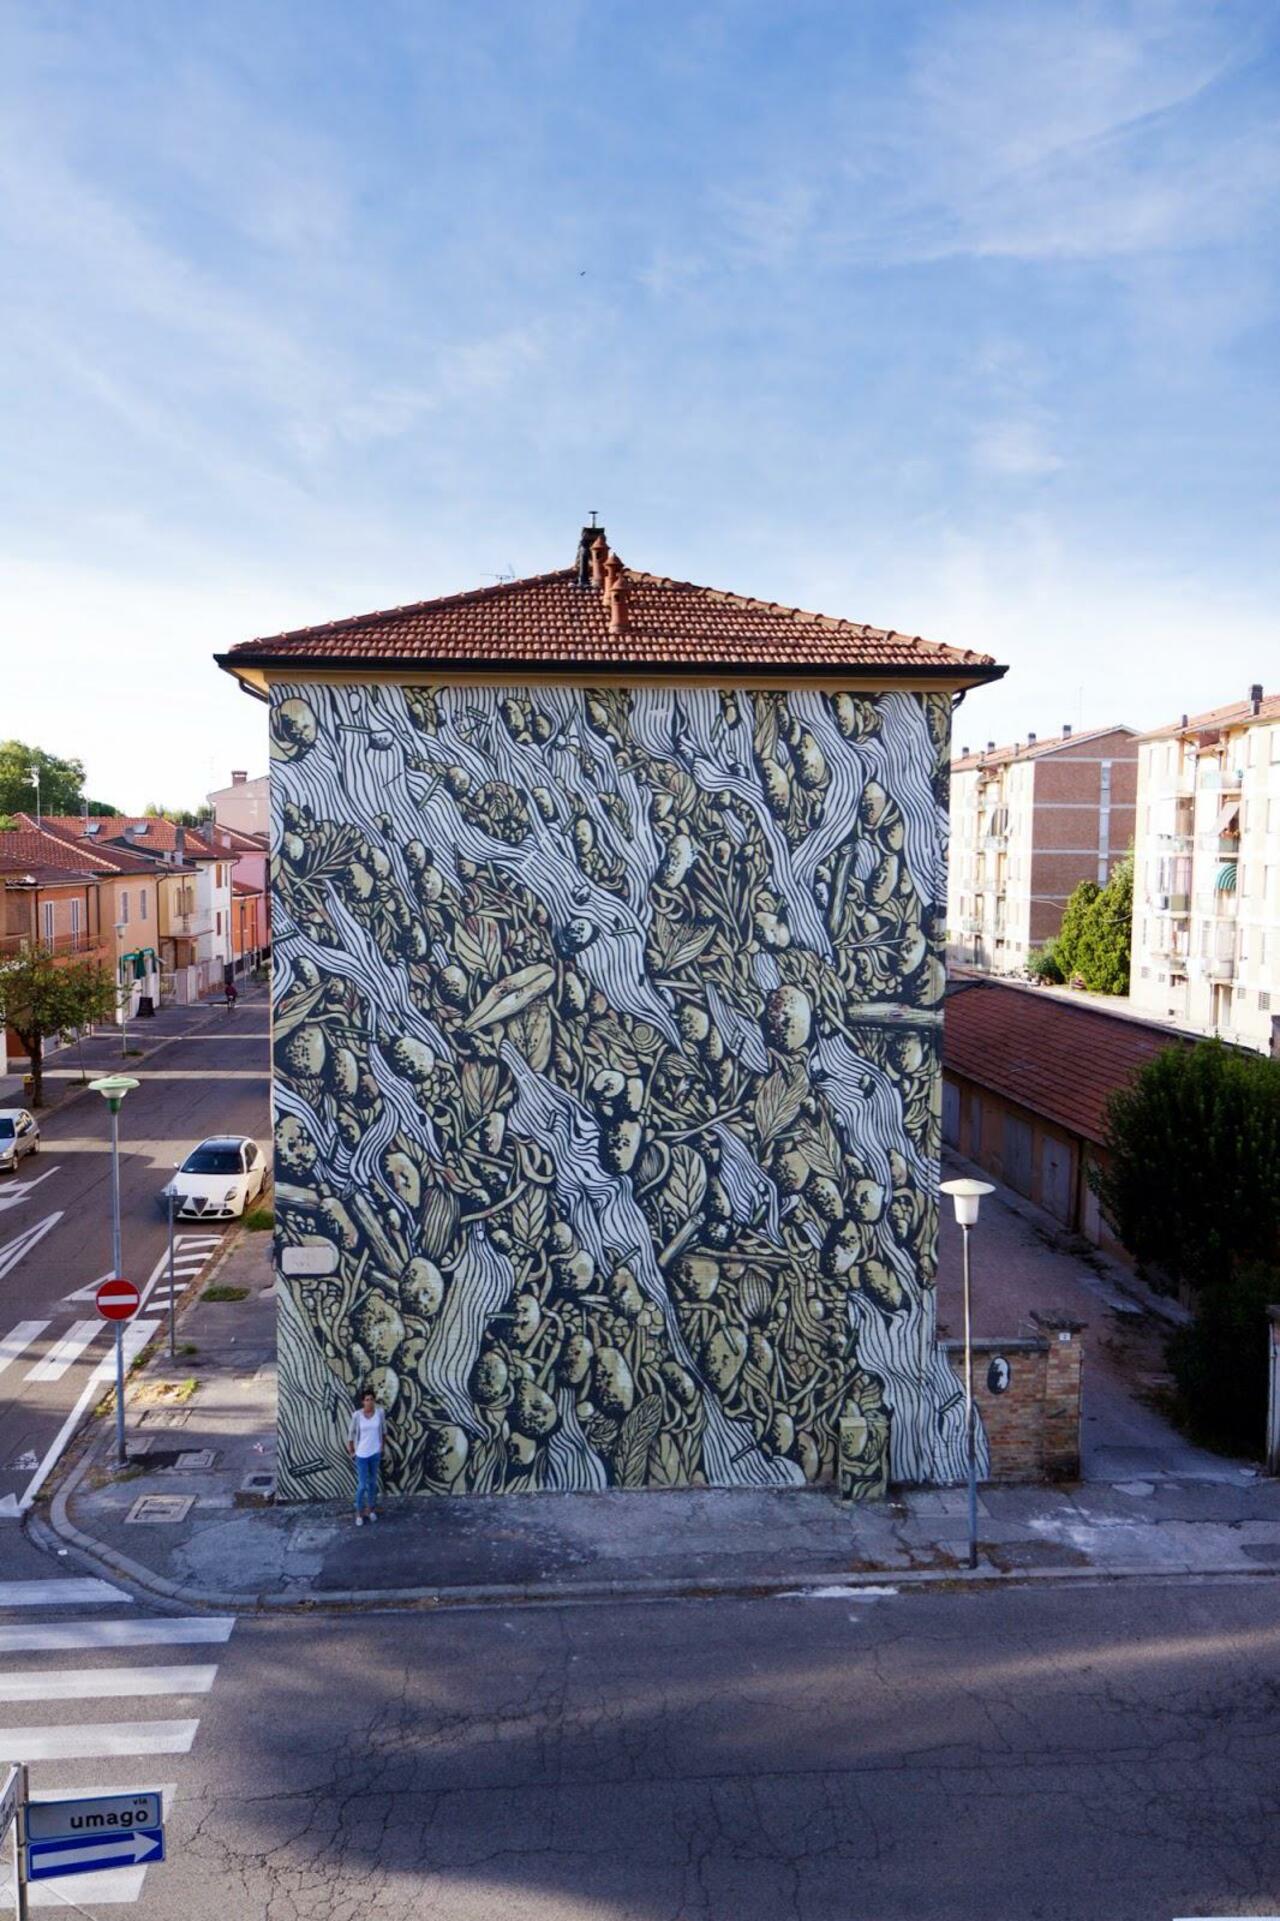 'Fiumi Uniti', a new mural by Tellas in Ravenna, Italy. #StreetArt #Graffiti #Mural http://t.co/9VPr17FBFl